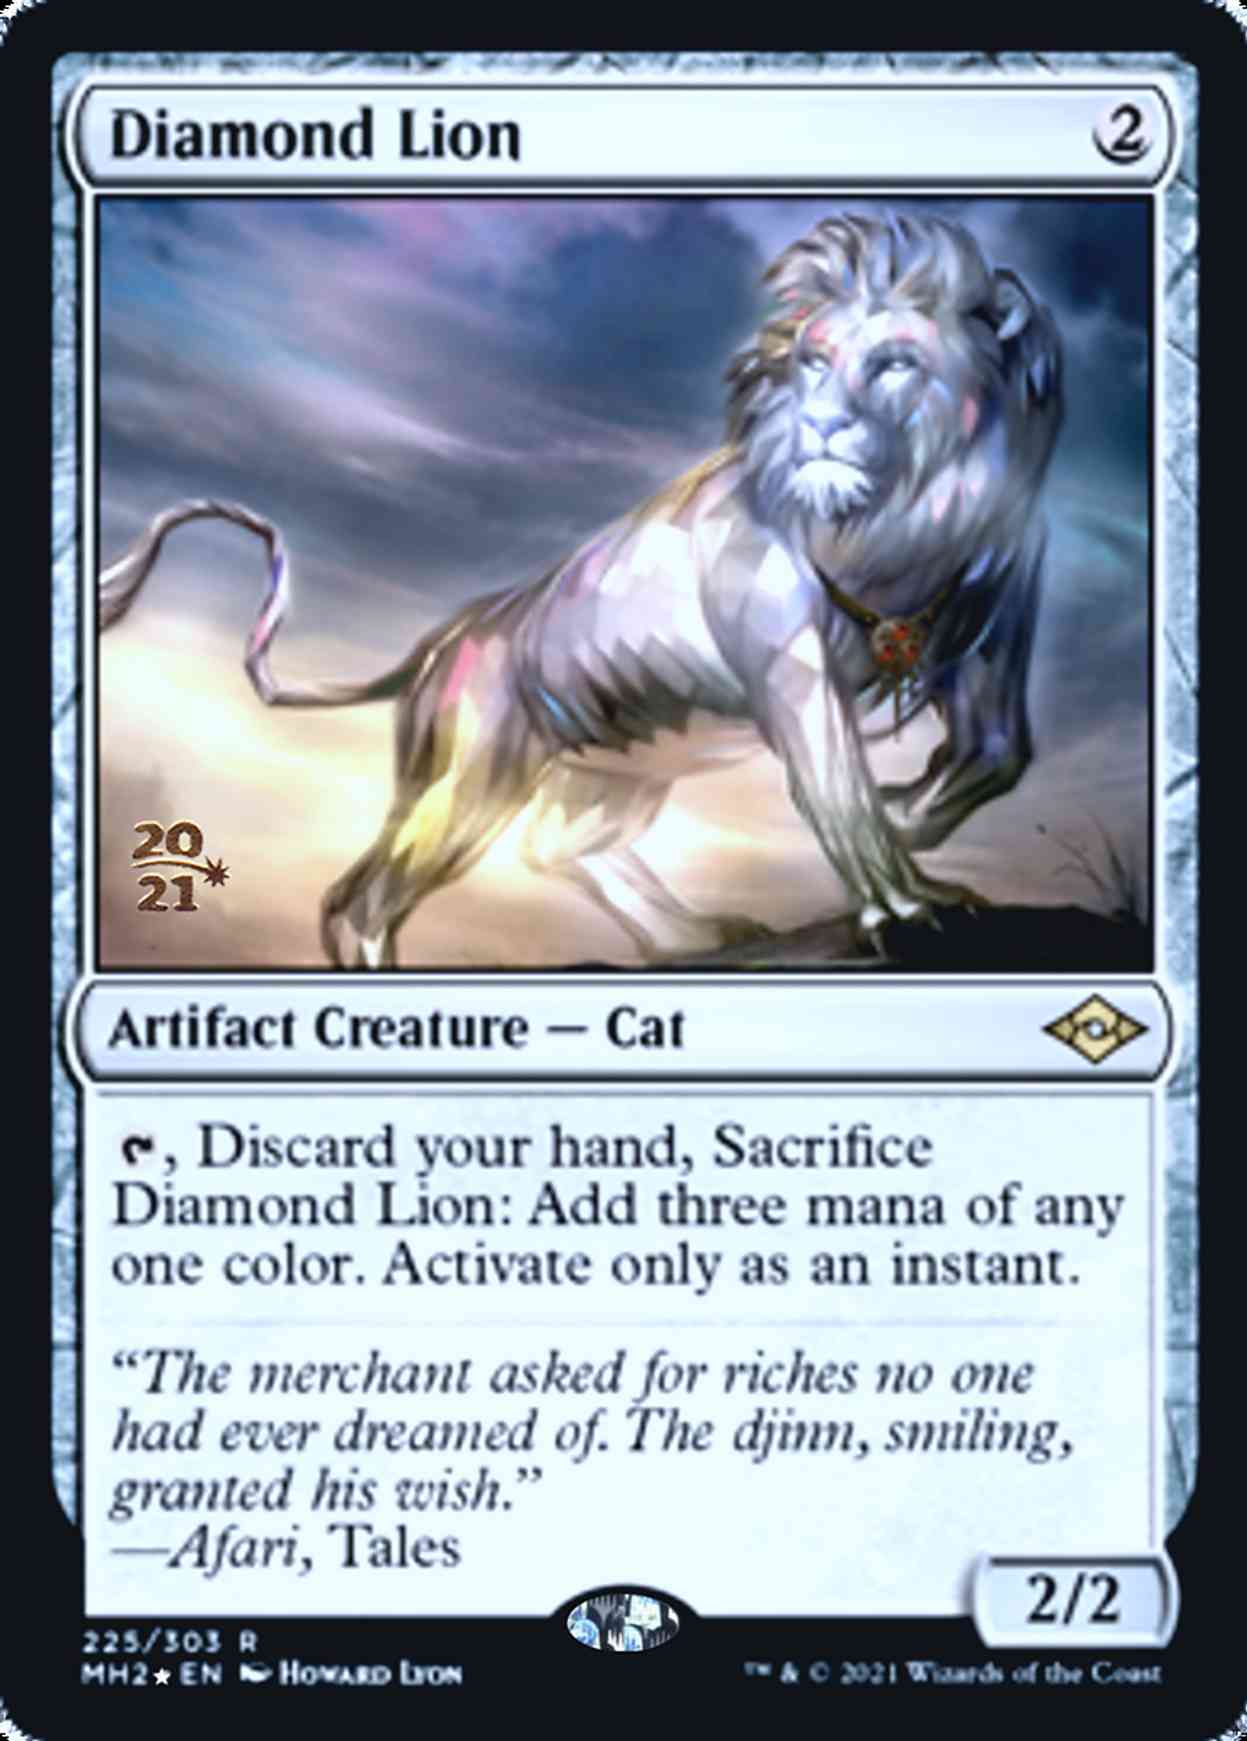 Diamond Lion magic card front